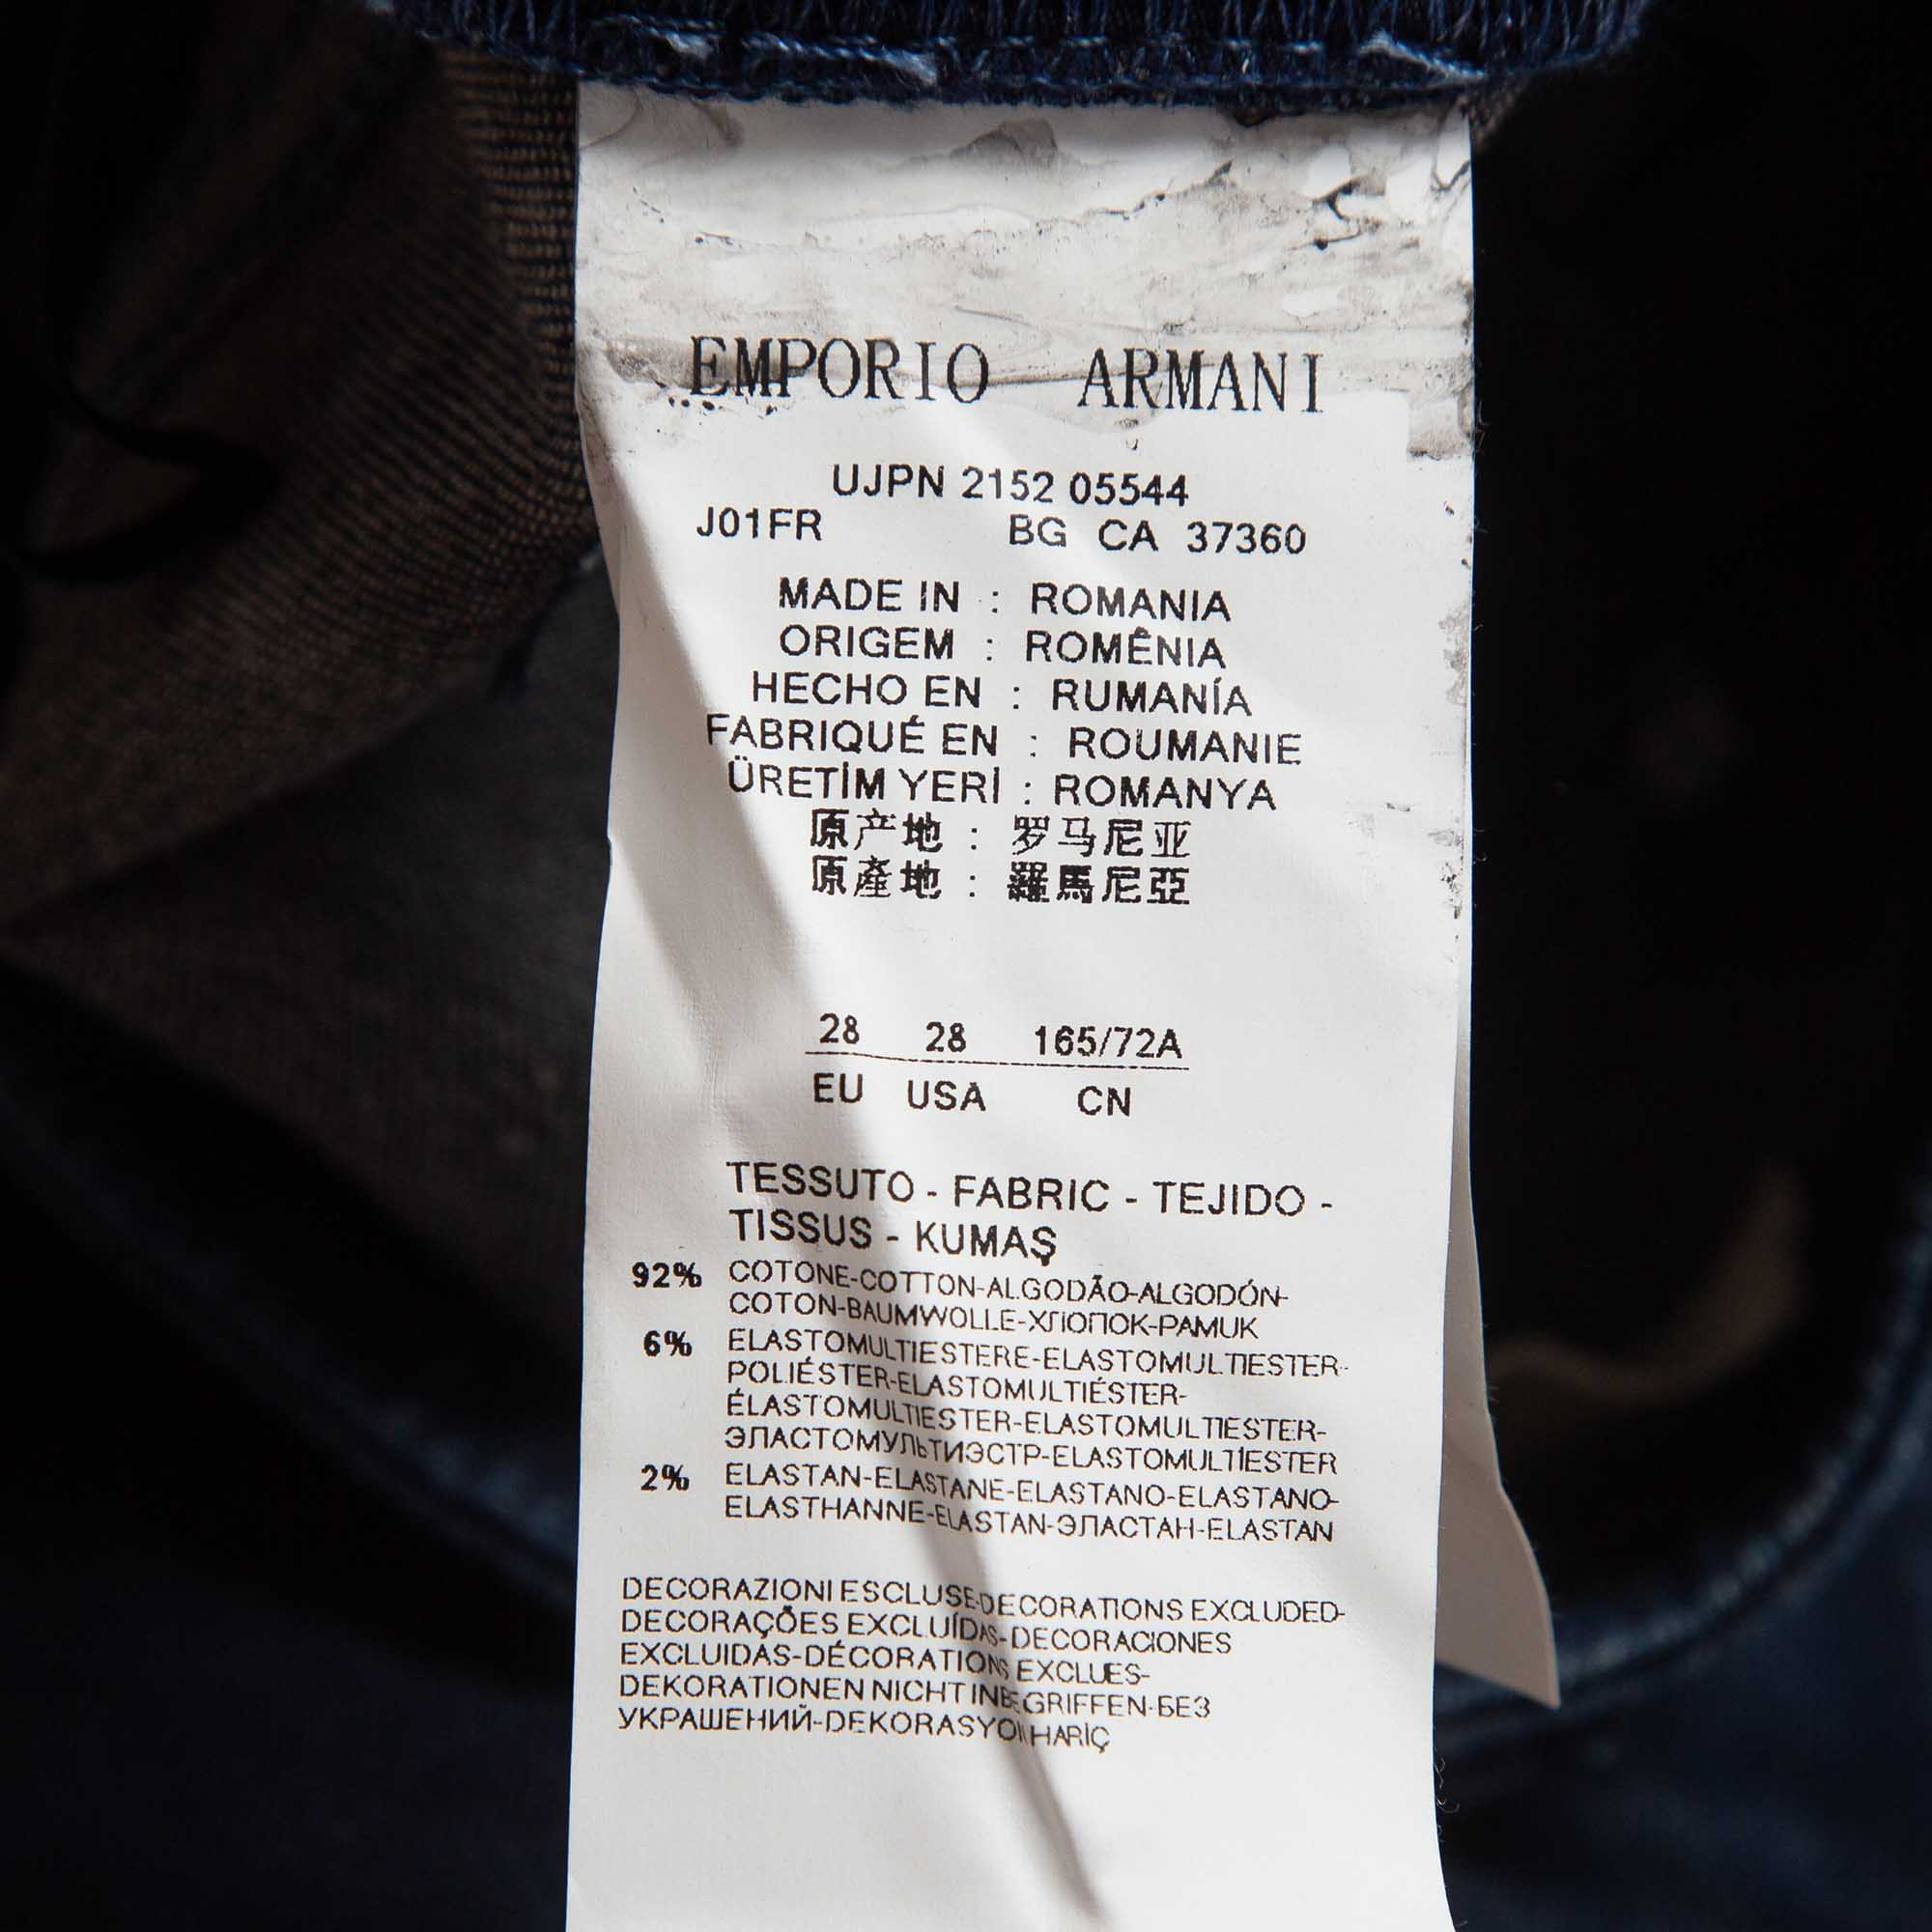 Emporio Armani Dark Blue Pocket Detailed Dakota Jeans M Waist 28